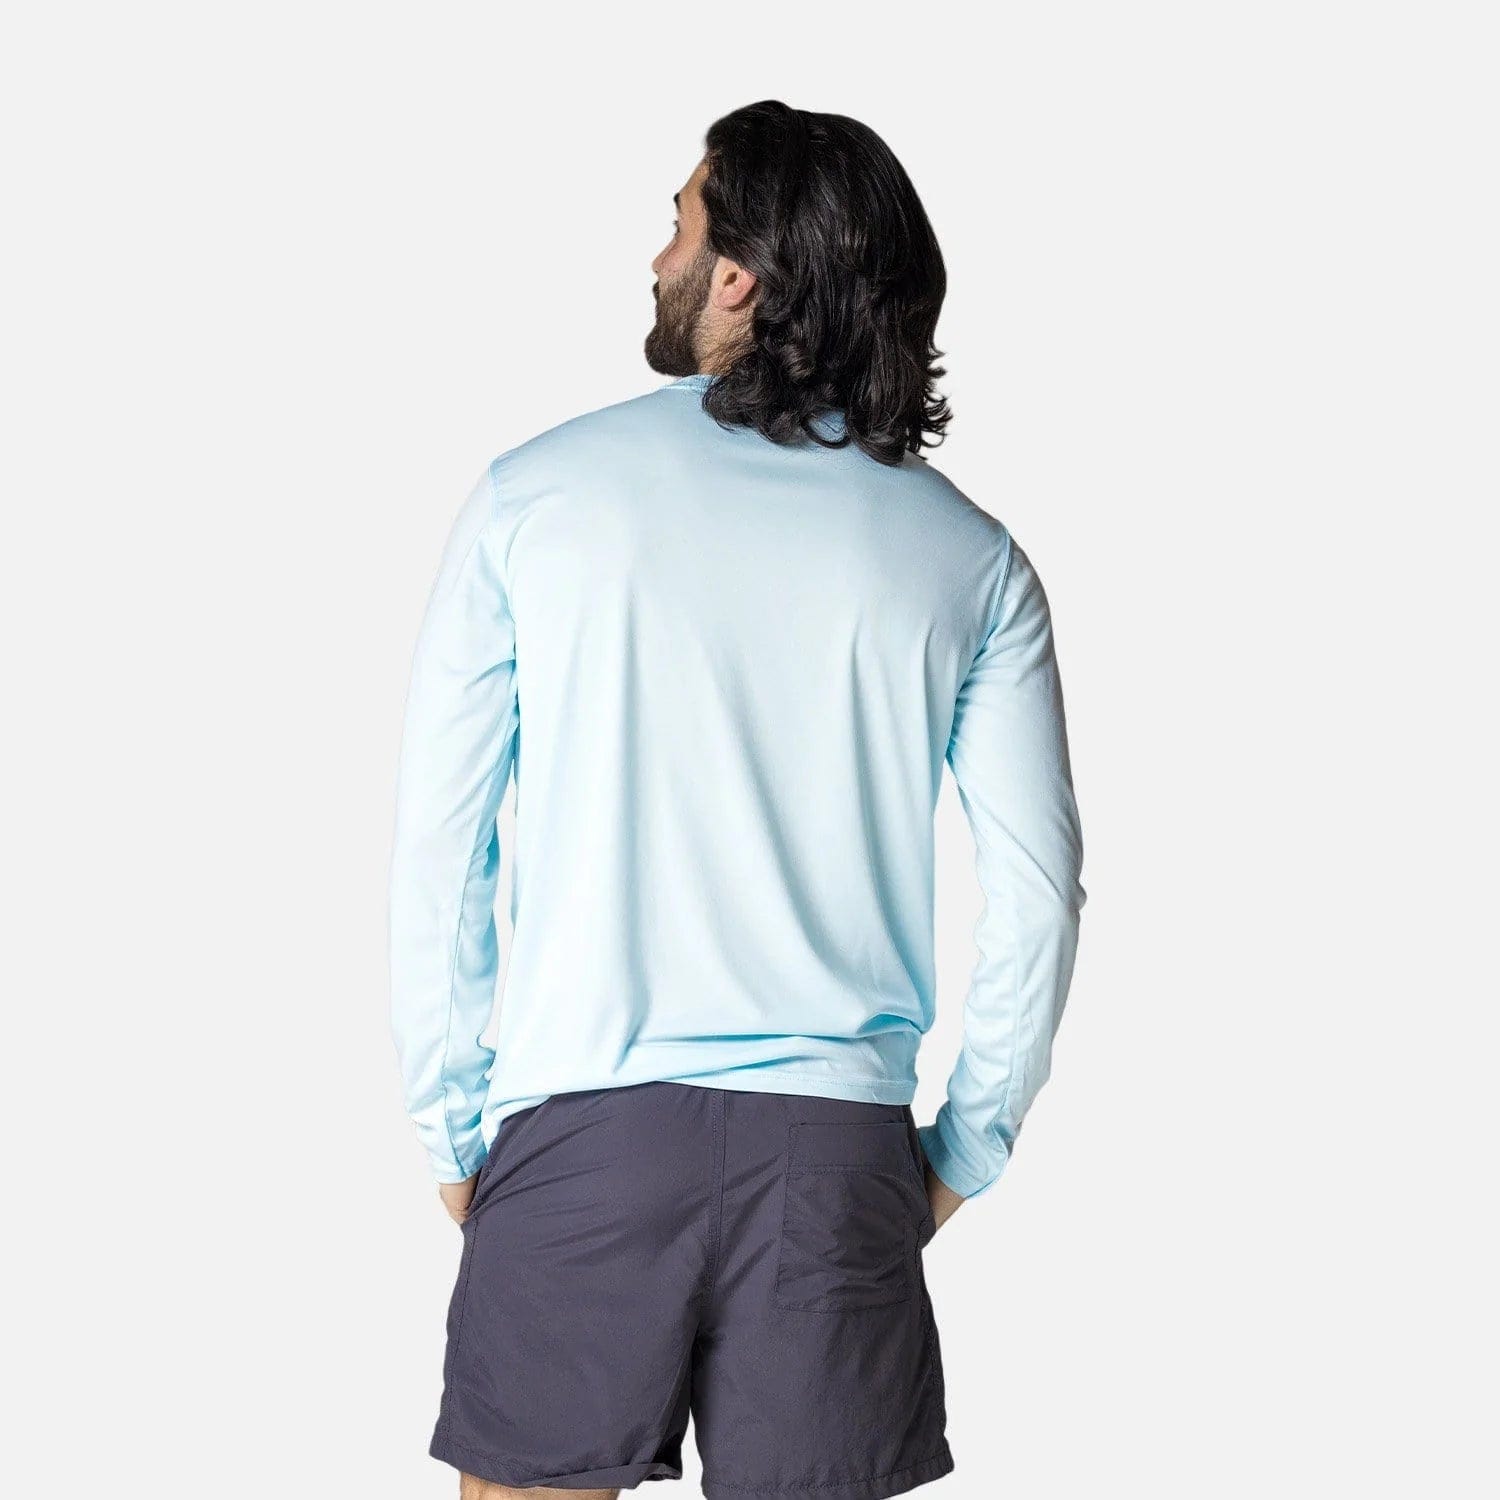  Mens Sun Protection Hoodie UPF 50+ Fishing Hiking Shirt Long  Sleeve SPF UV Shirt Rash Guard Lightweight Light Green S